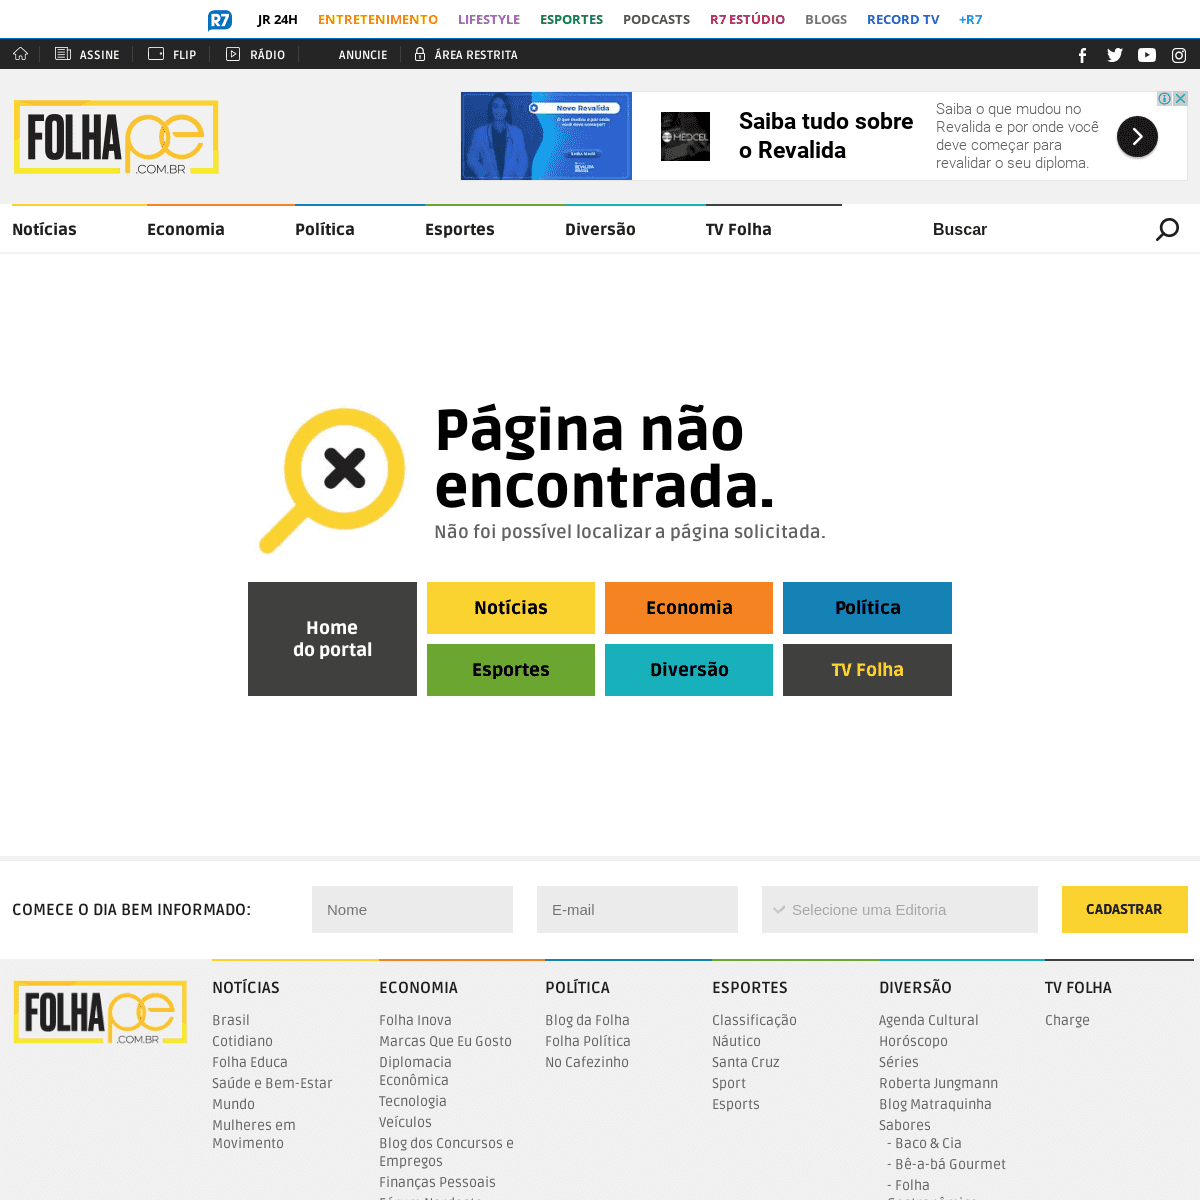 A complete backup of www.folhape.com.br/diversao/diversao/bbb-20/2020/02/08/NWS